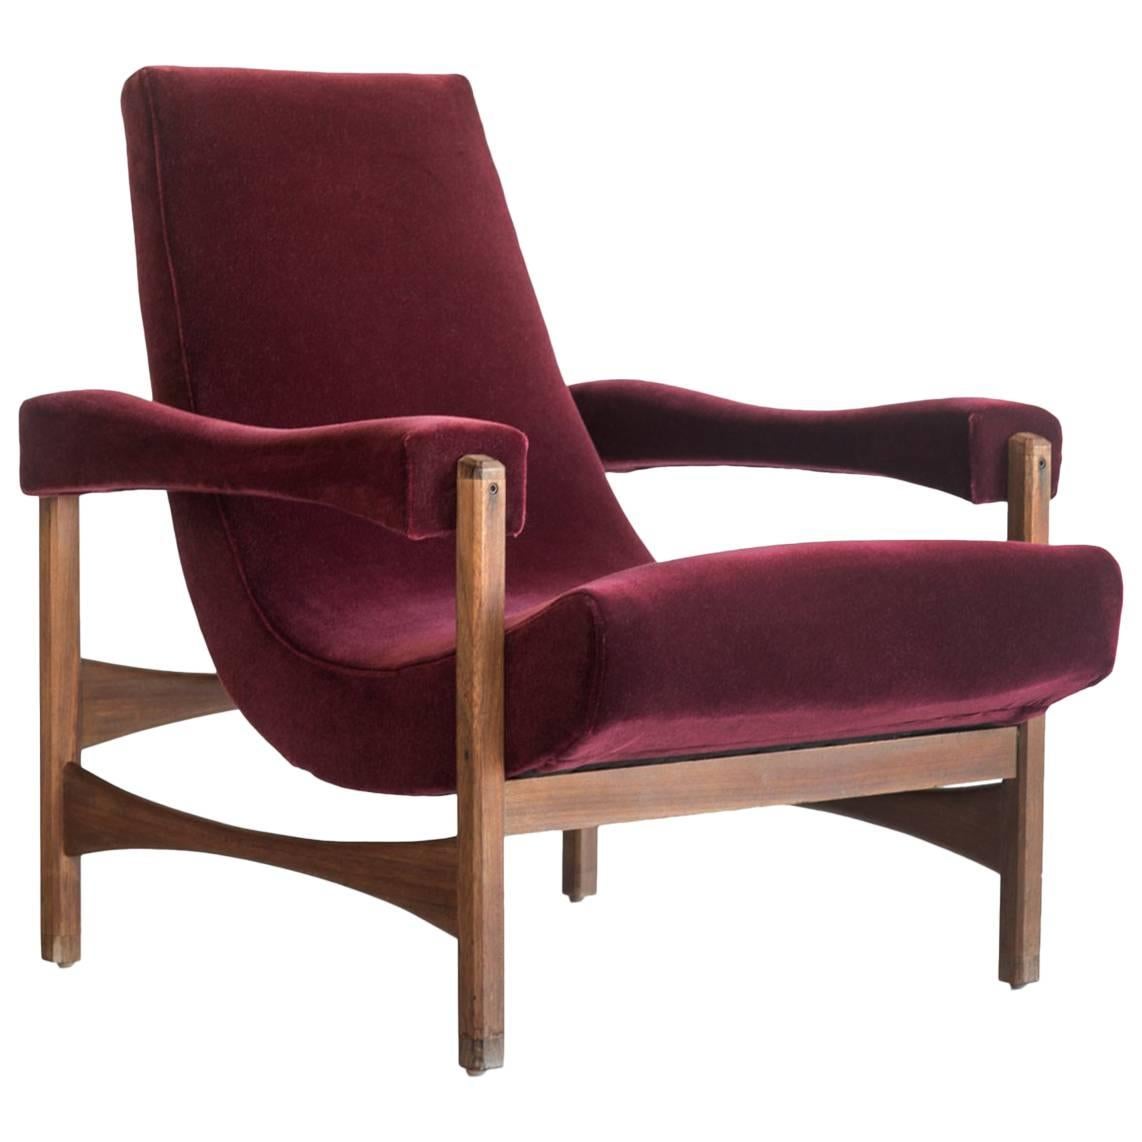 Italian Sling Arm Lounge Chair, circa 1960